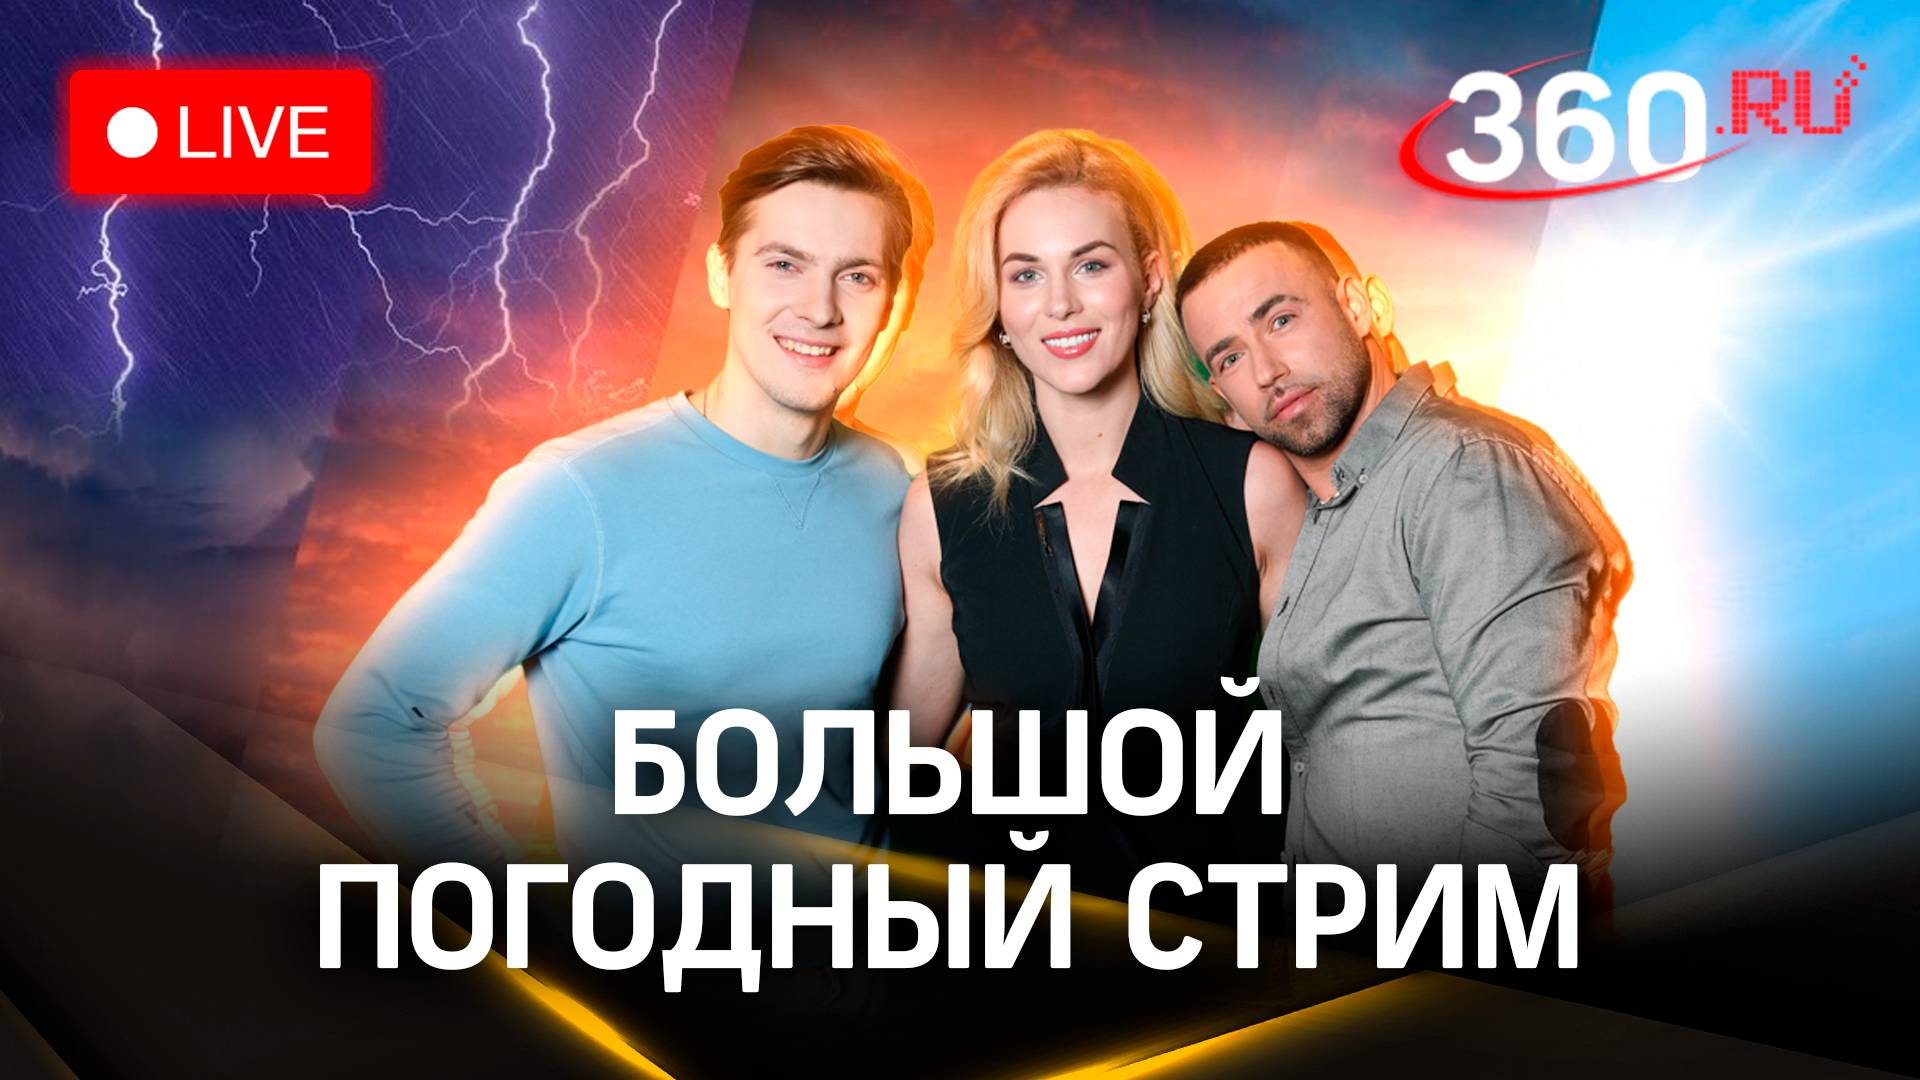 Погода 360: вейксерф, теннис и мегаливень в Ярославле | Прогноз погоды. Стрим